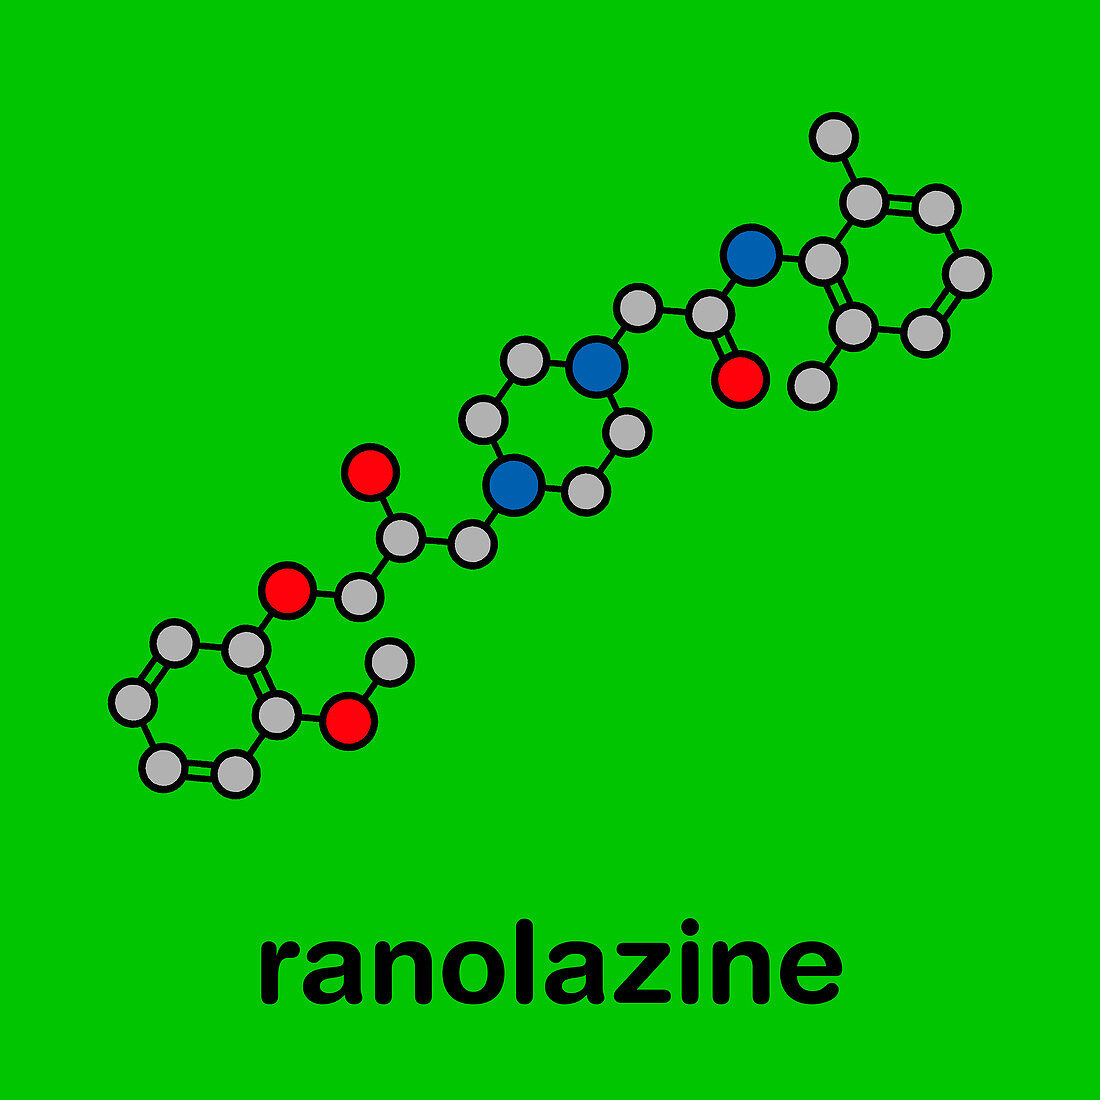 Ranolazine antianginal drug, molecular model